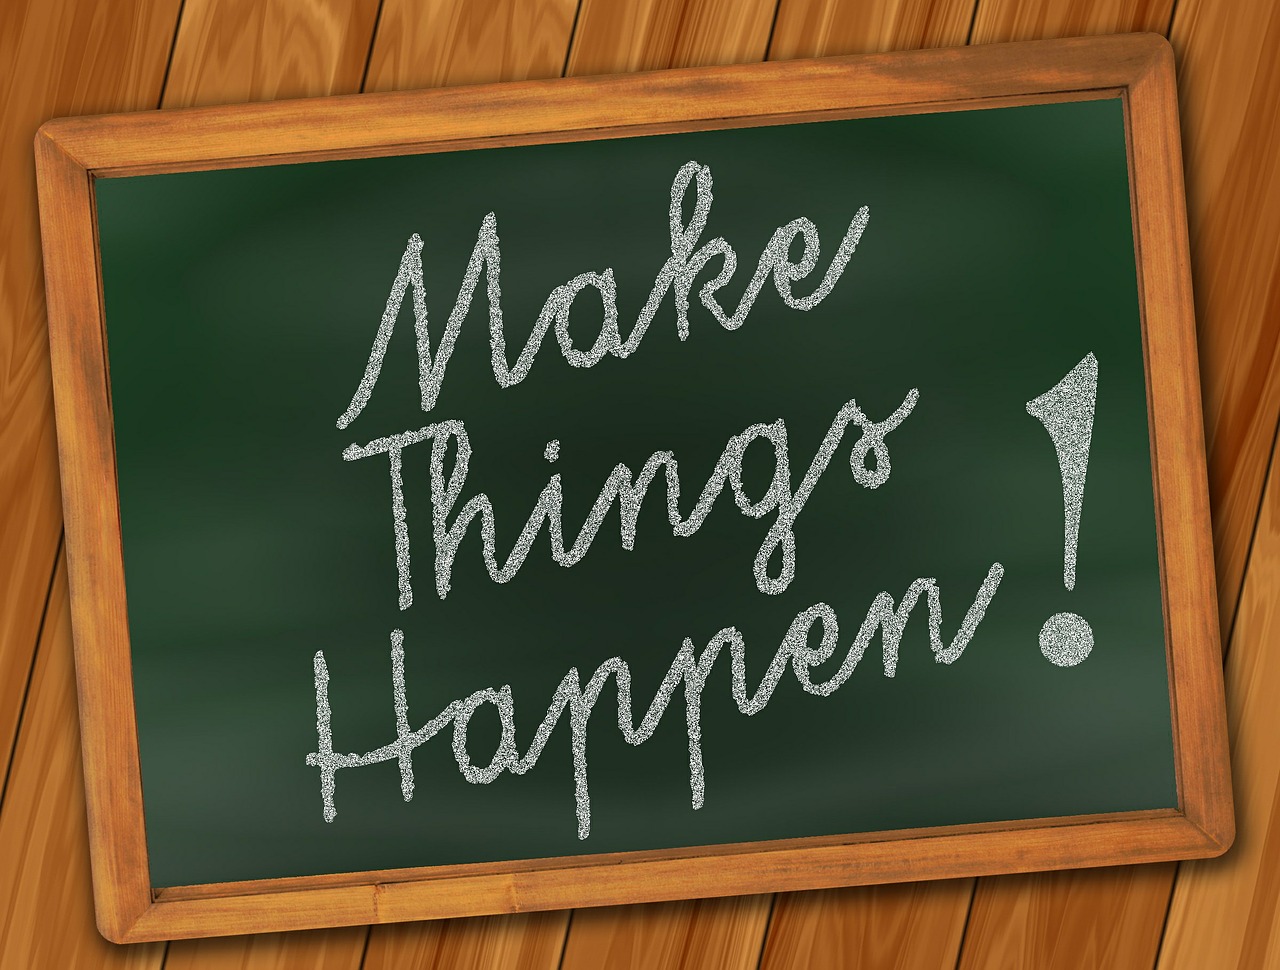 Make things happen 